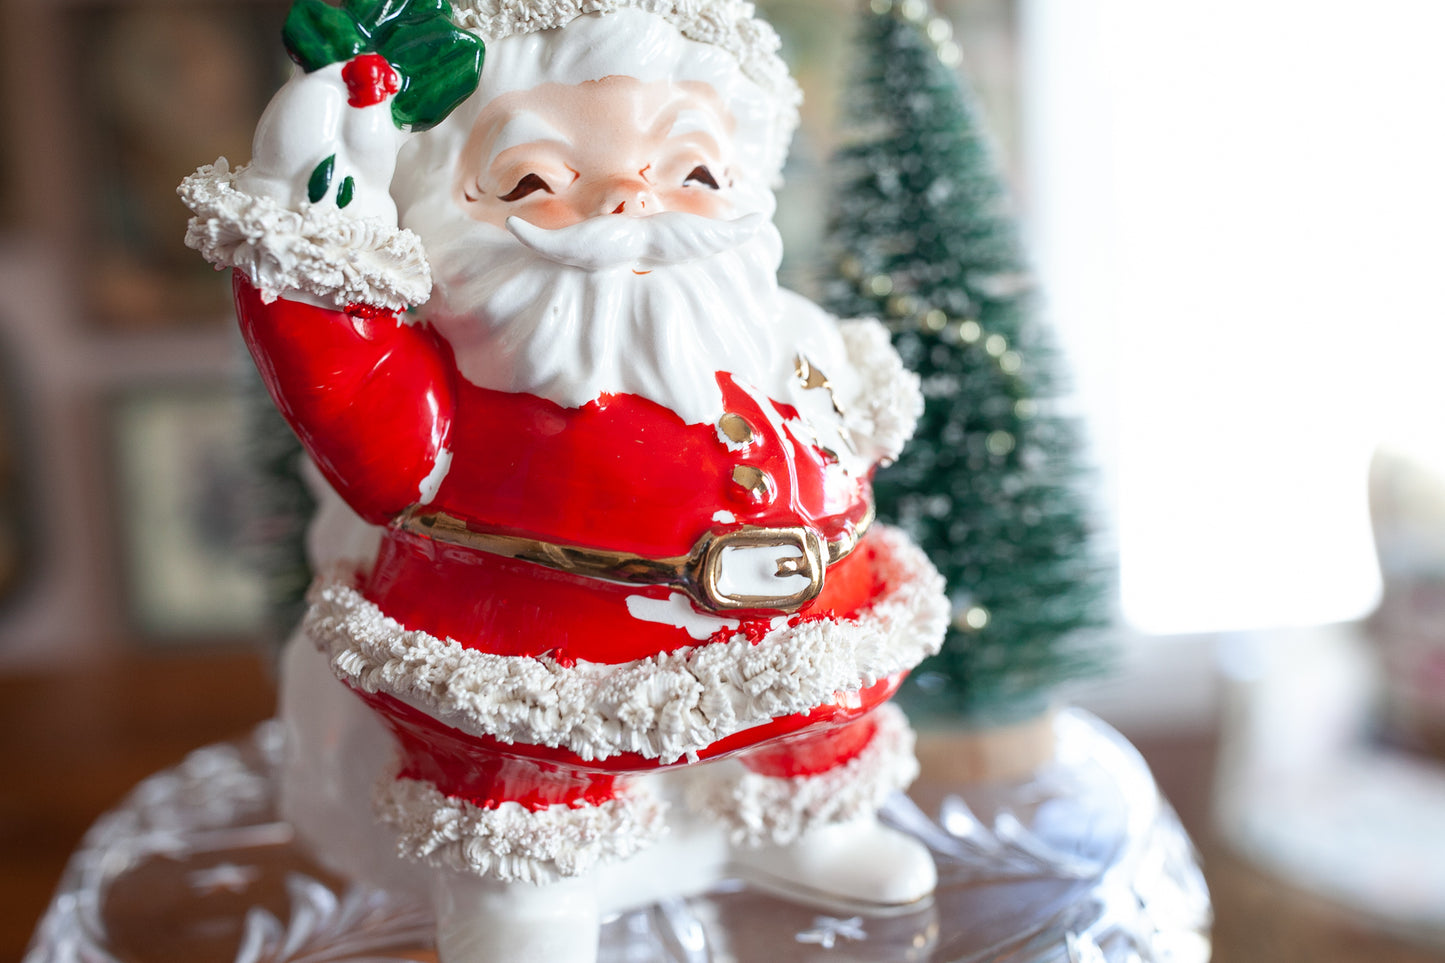 Napco Ilx266 Large Santa Claus Christmas Planter W-Bag-Holly- Spaghetti Trim - Vintage Santa